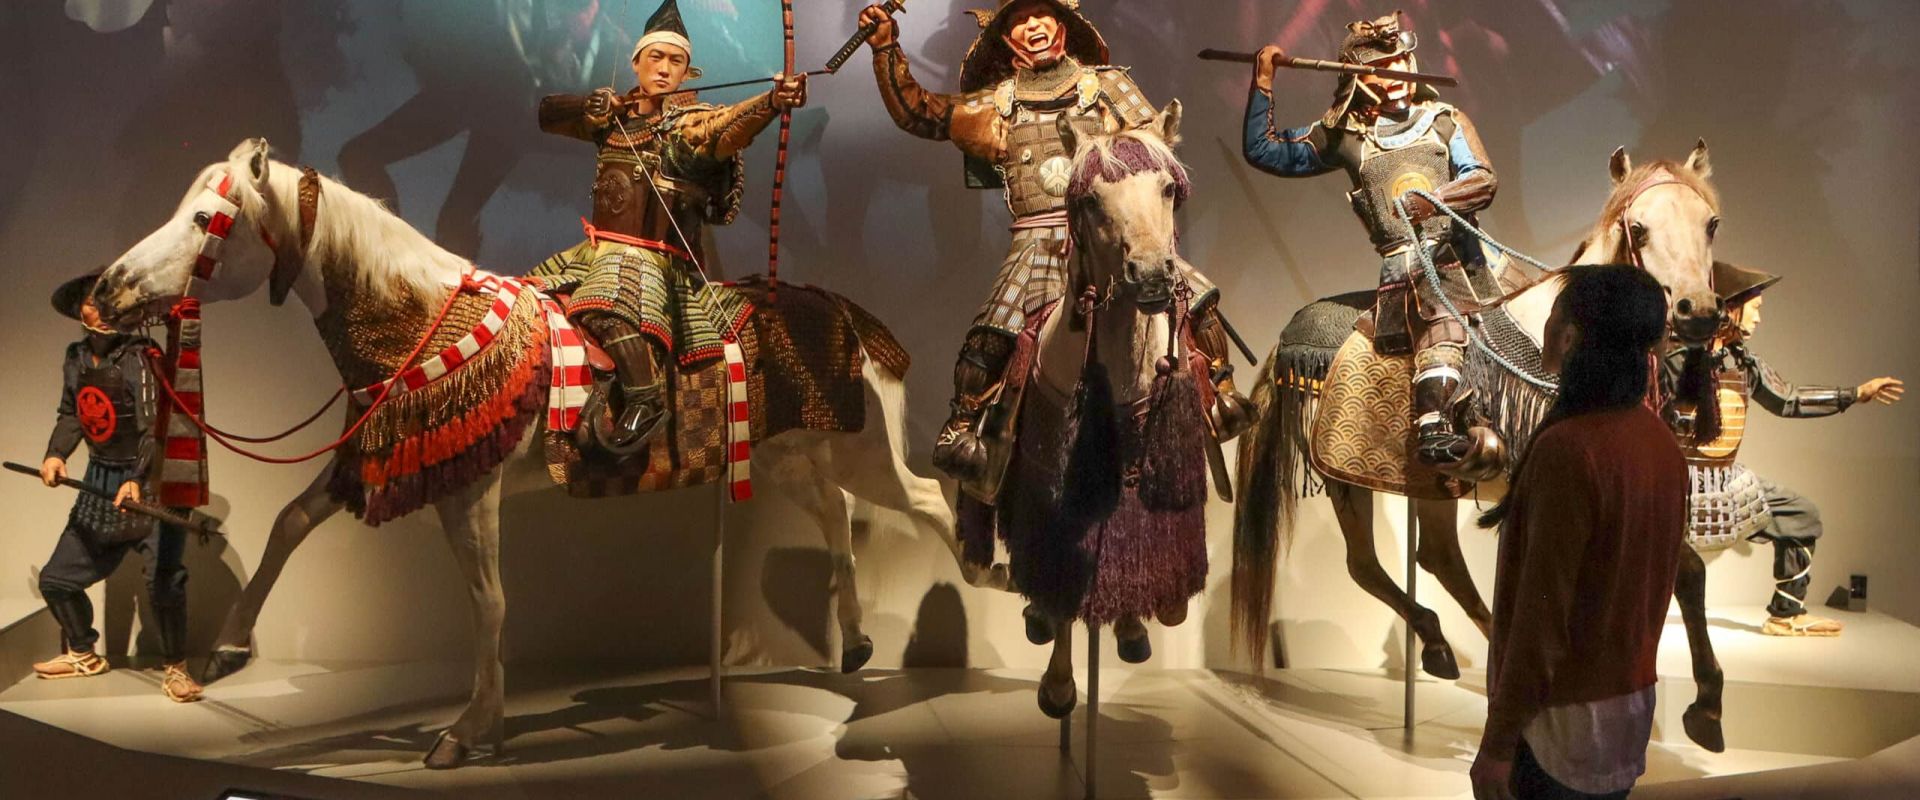 Samurai Museum Berlin with interactive museum technology